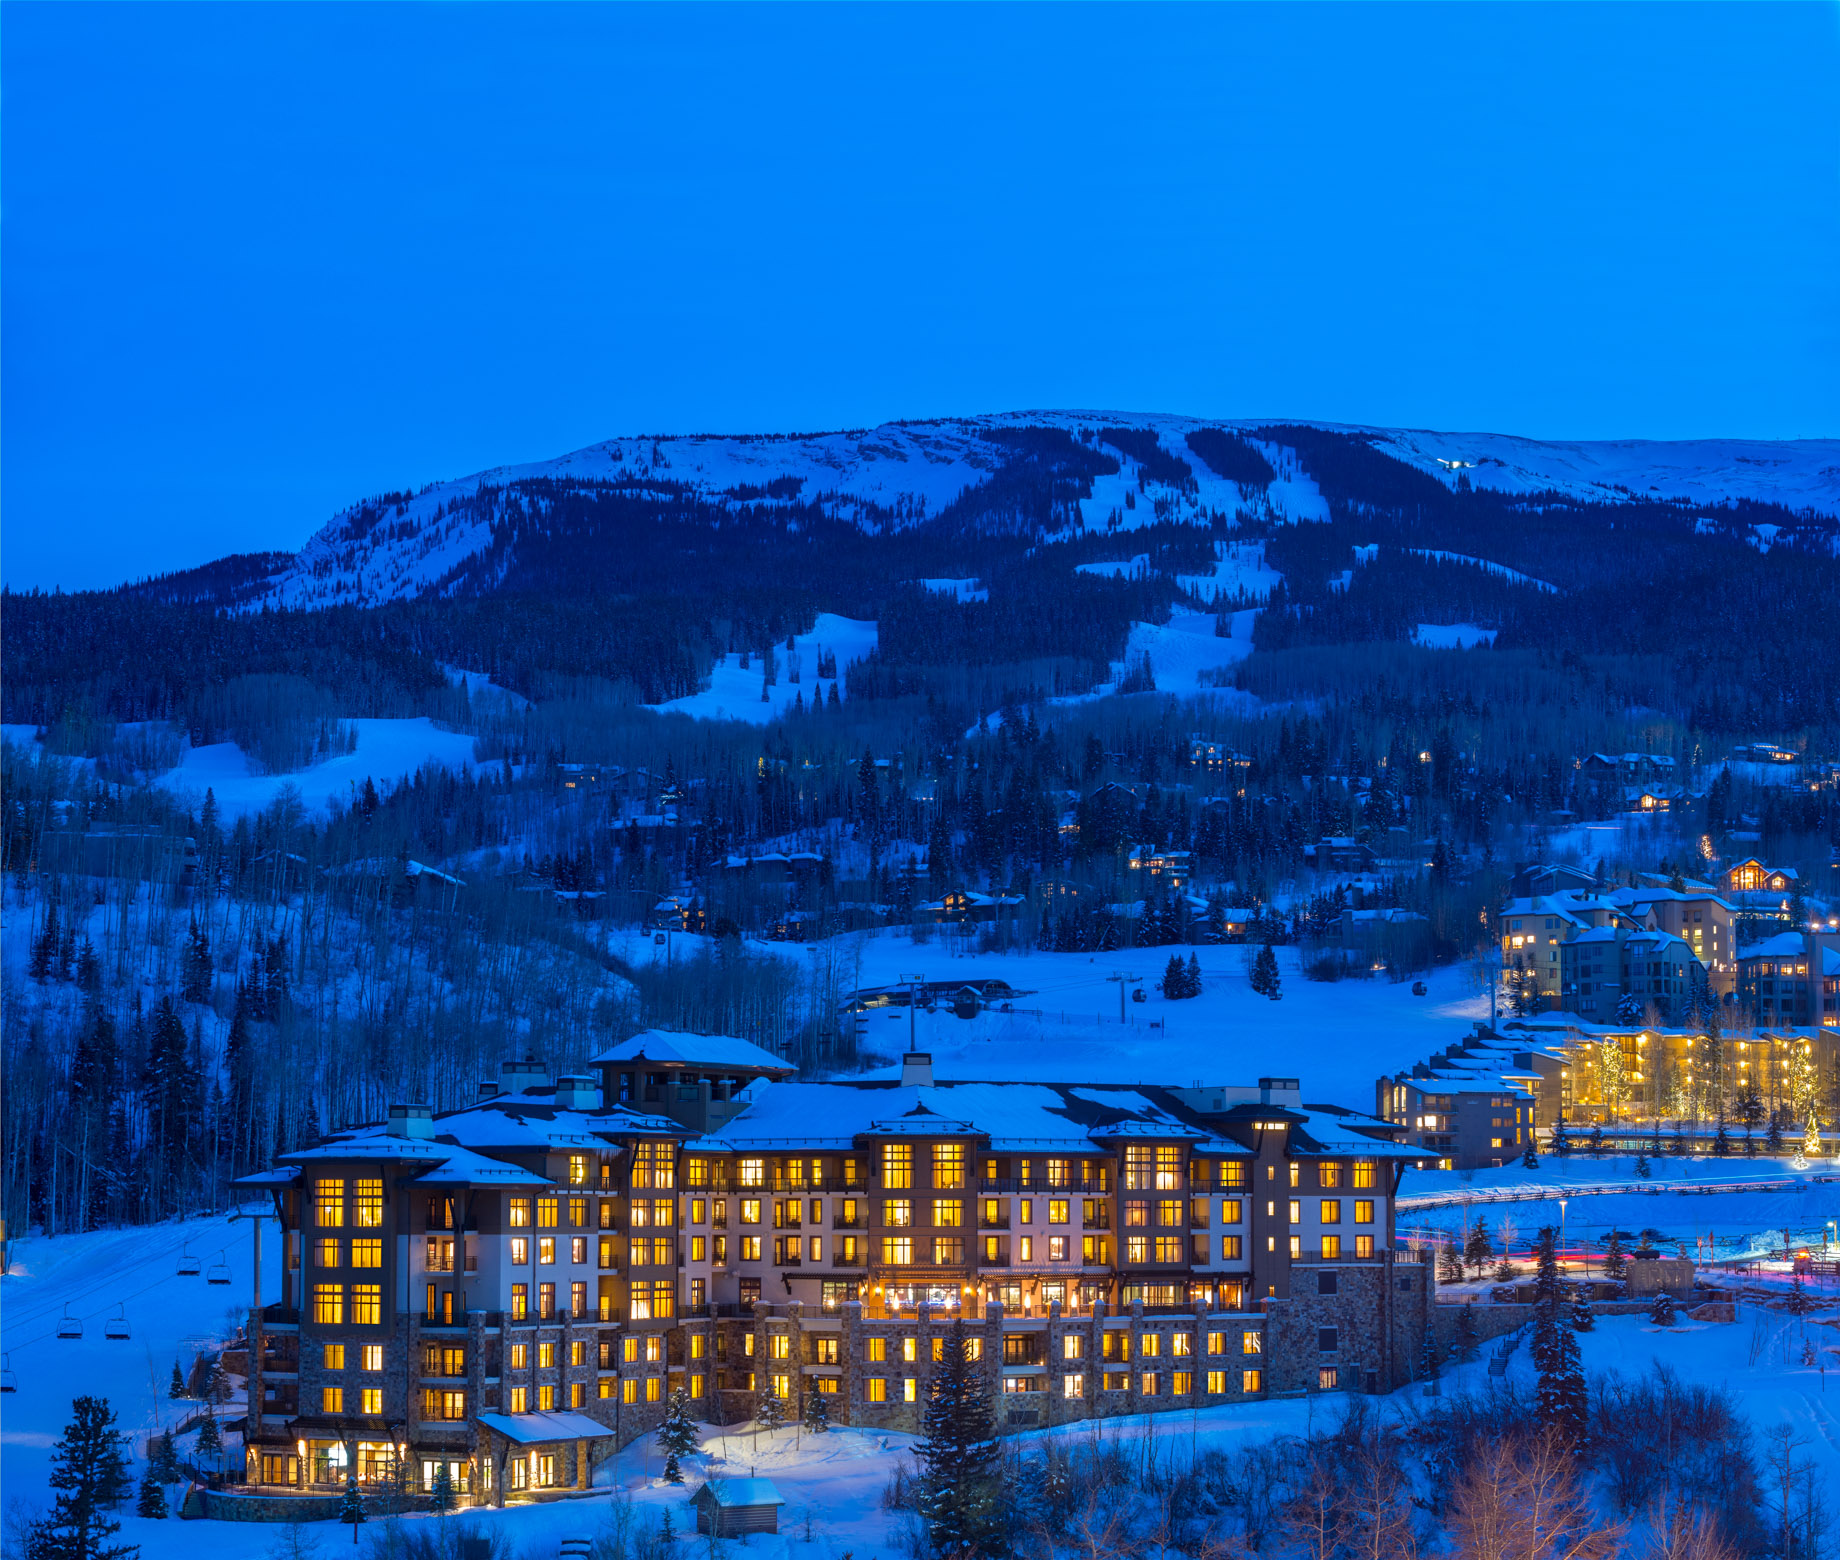 Viceroy Snowmass Luxury Resort - Aspen Snowmass Village, CO, USA - Hotel Winter Night View